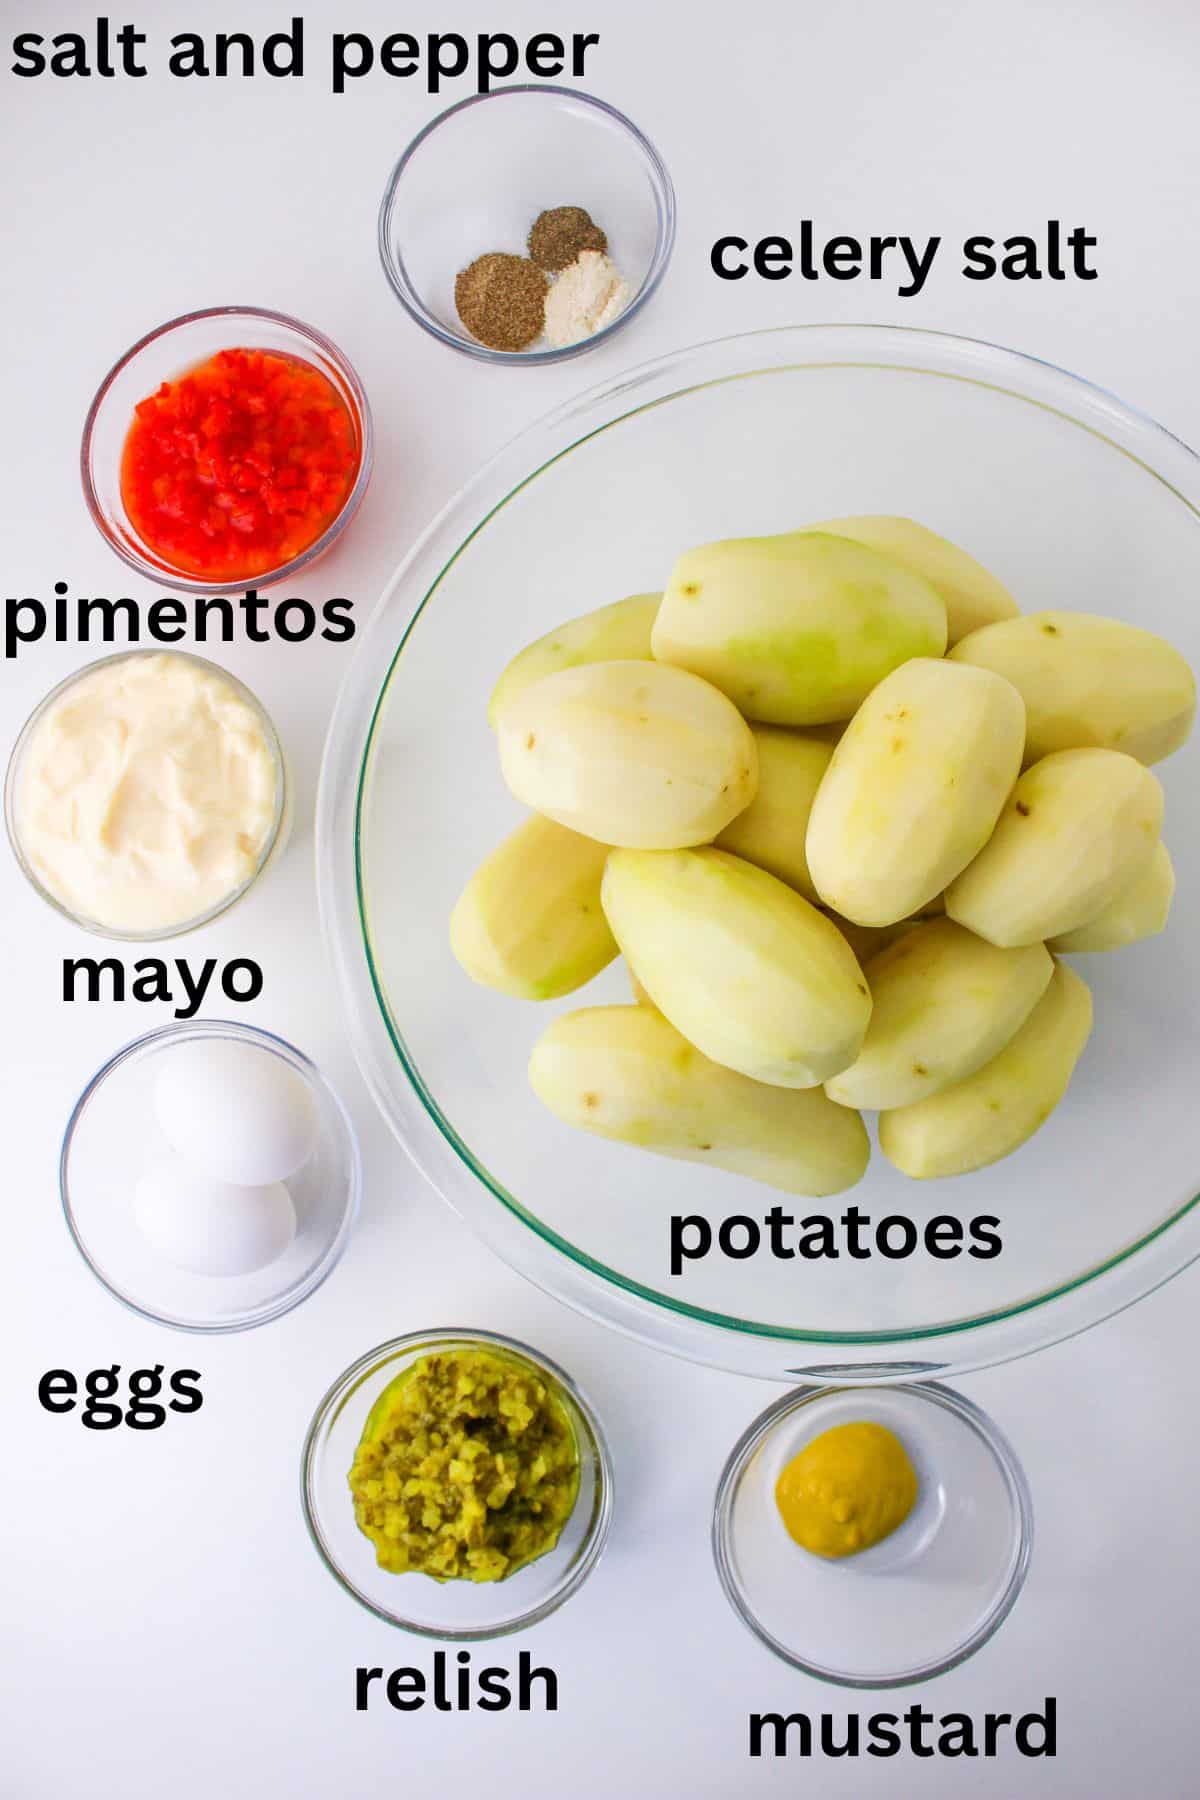 salt, papper, celery salt, pimentos, mayo, eggs, relish. mustard, and potatoes